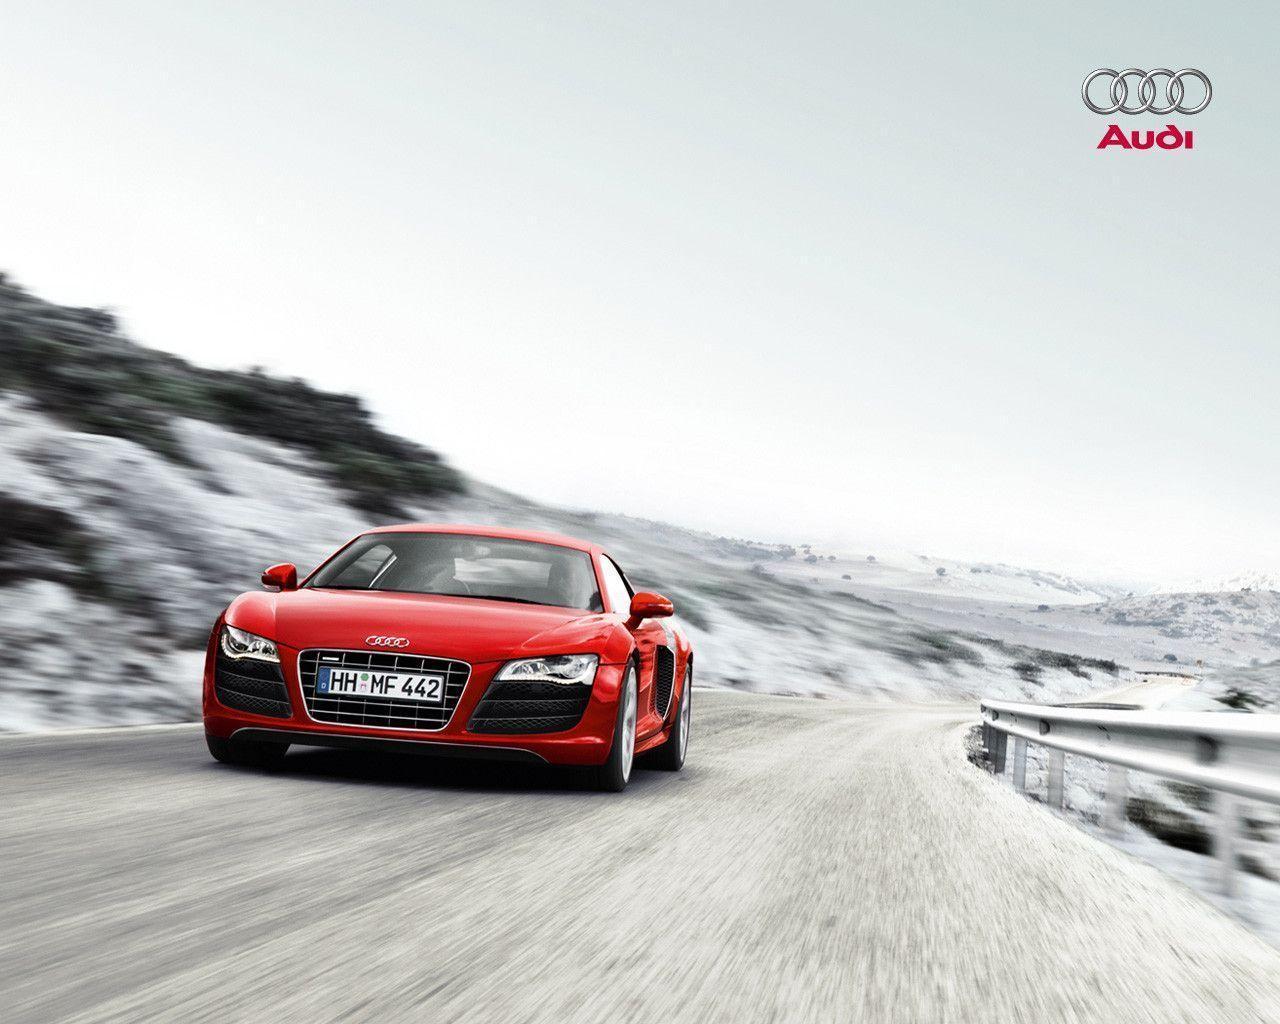 Audi R8 5.2 FSI quattro Photo Gallery